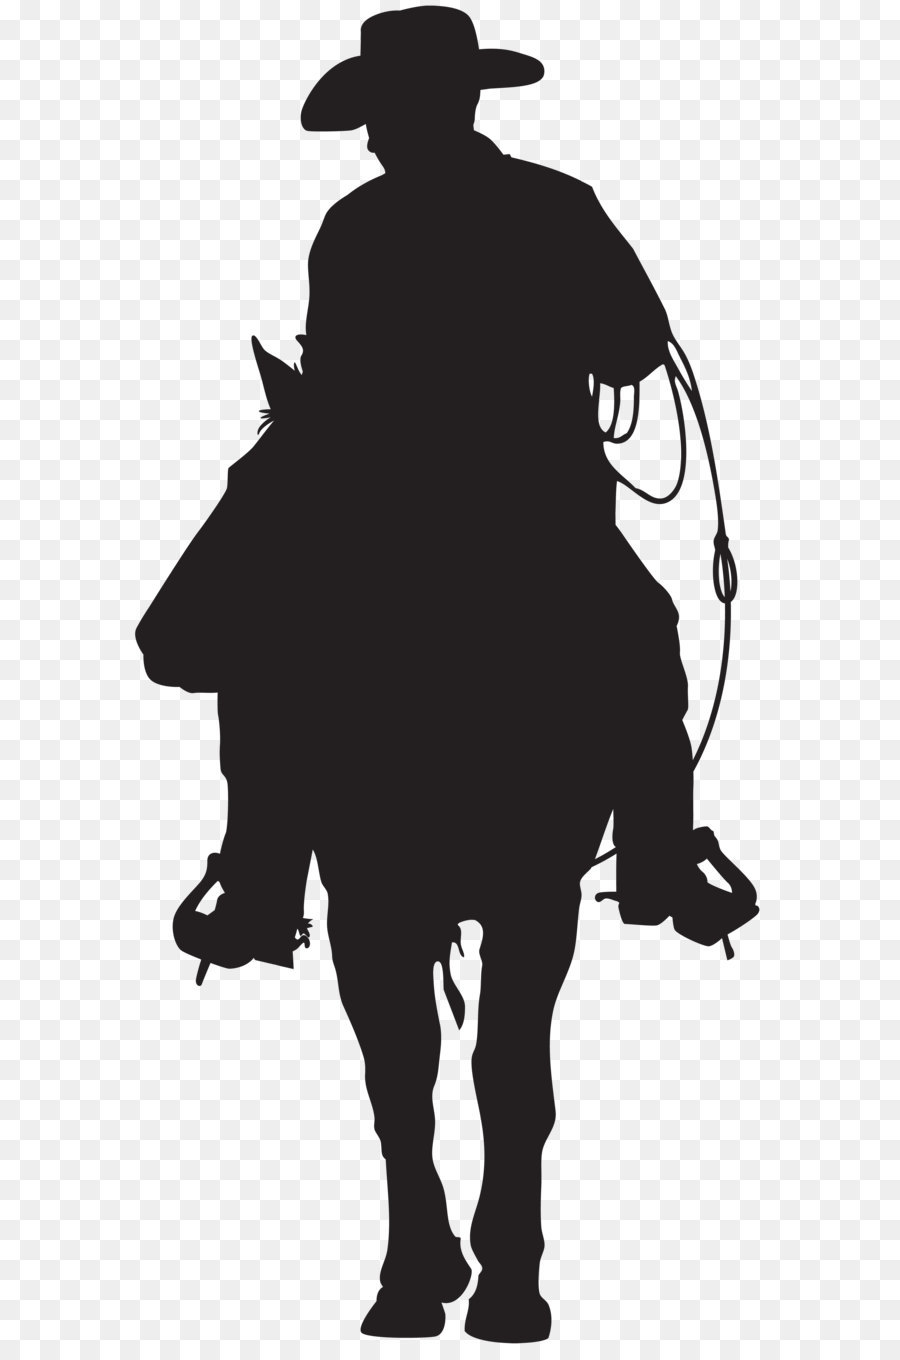 Silhouette Cowboy American frontier Clip art - Cowboy Silhouette PNG